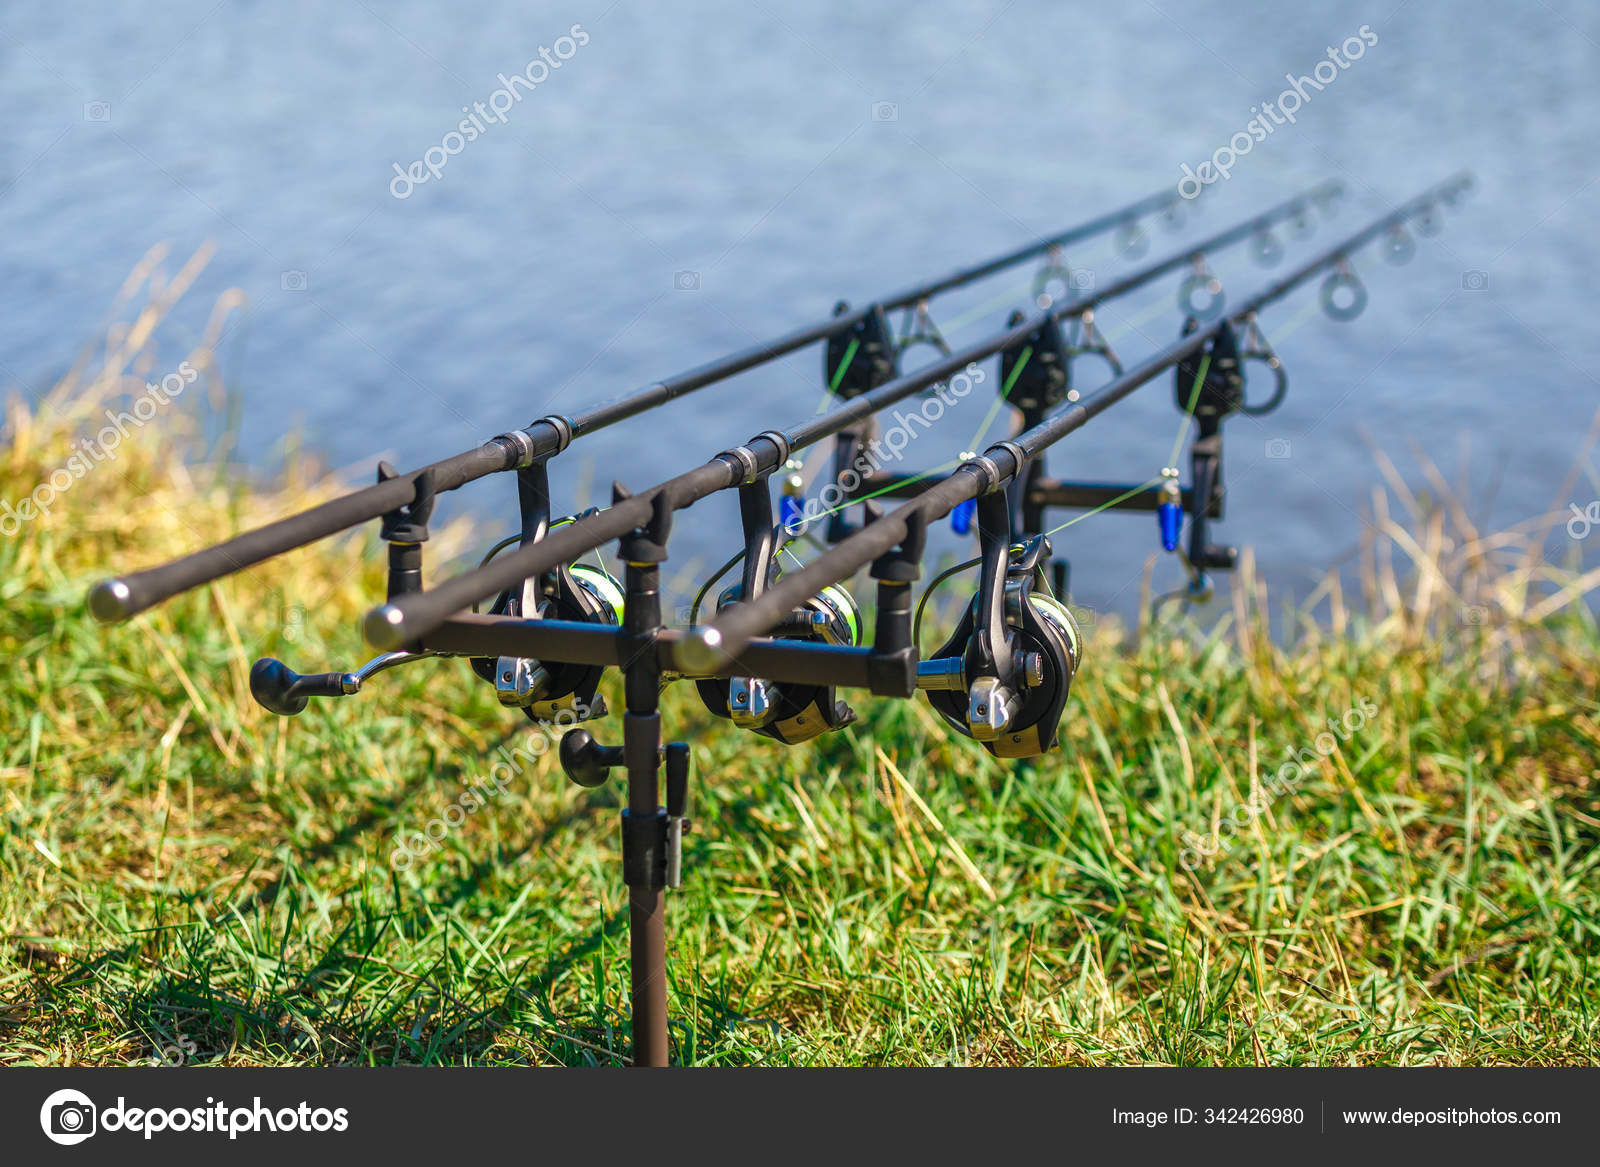 https://st3.depositphotos.com/6097600/34242/i/1600/depositphotos_342426980-stock-photo-fishing-adventures-carp-fishing-carp.jpg